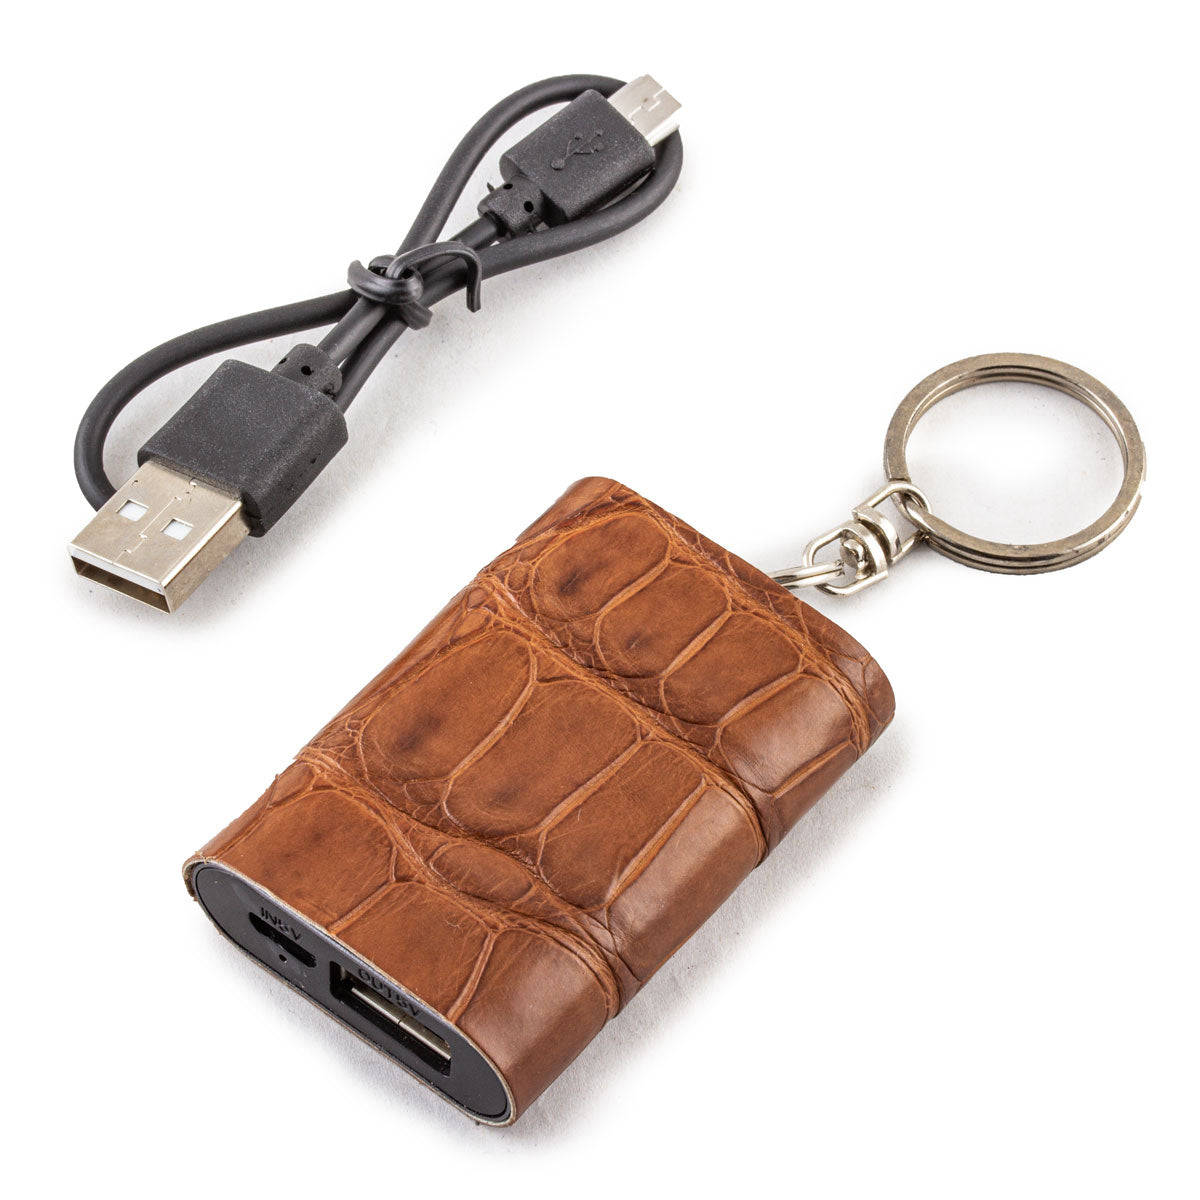 USB - Storage - All Accessories - Apple